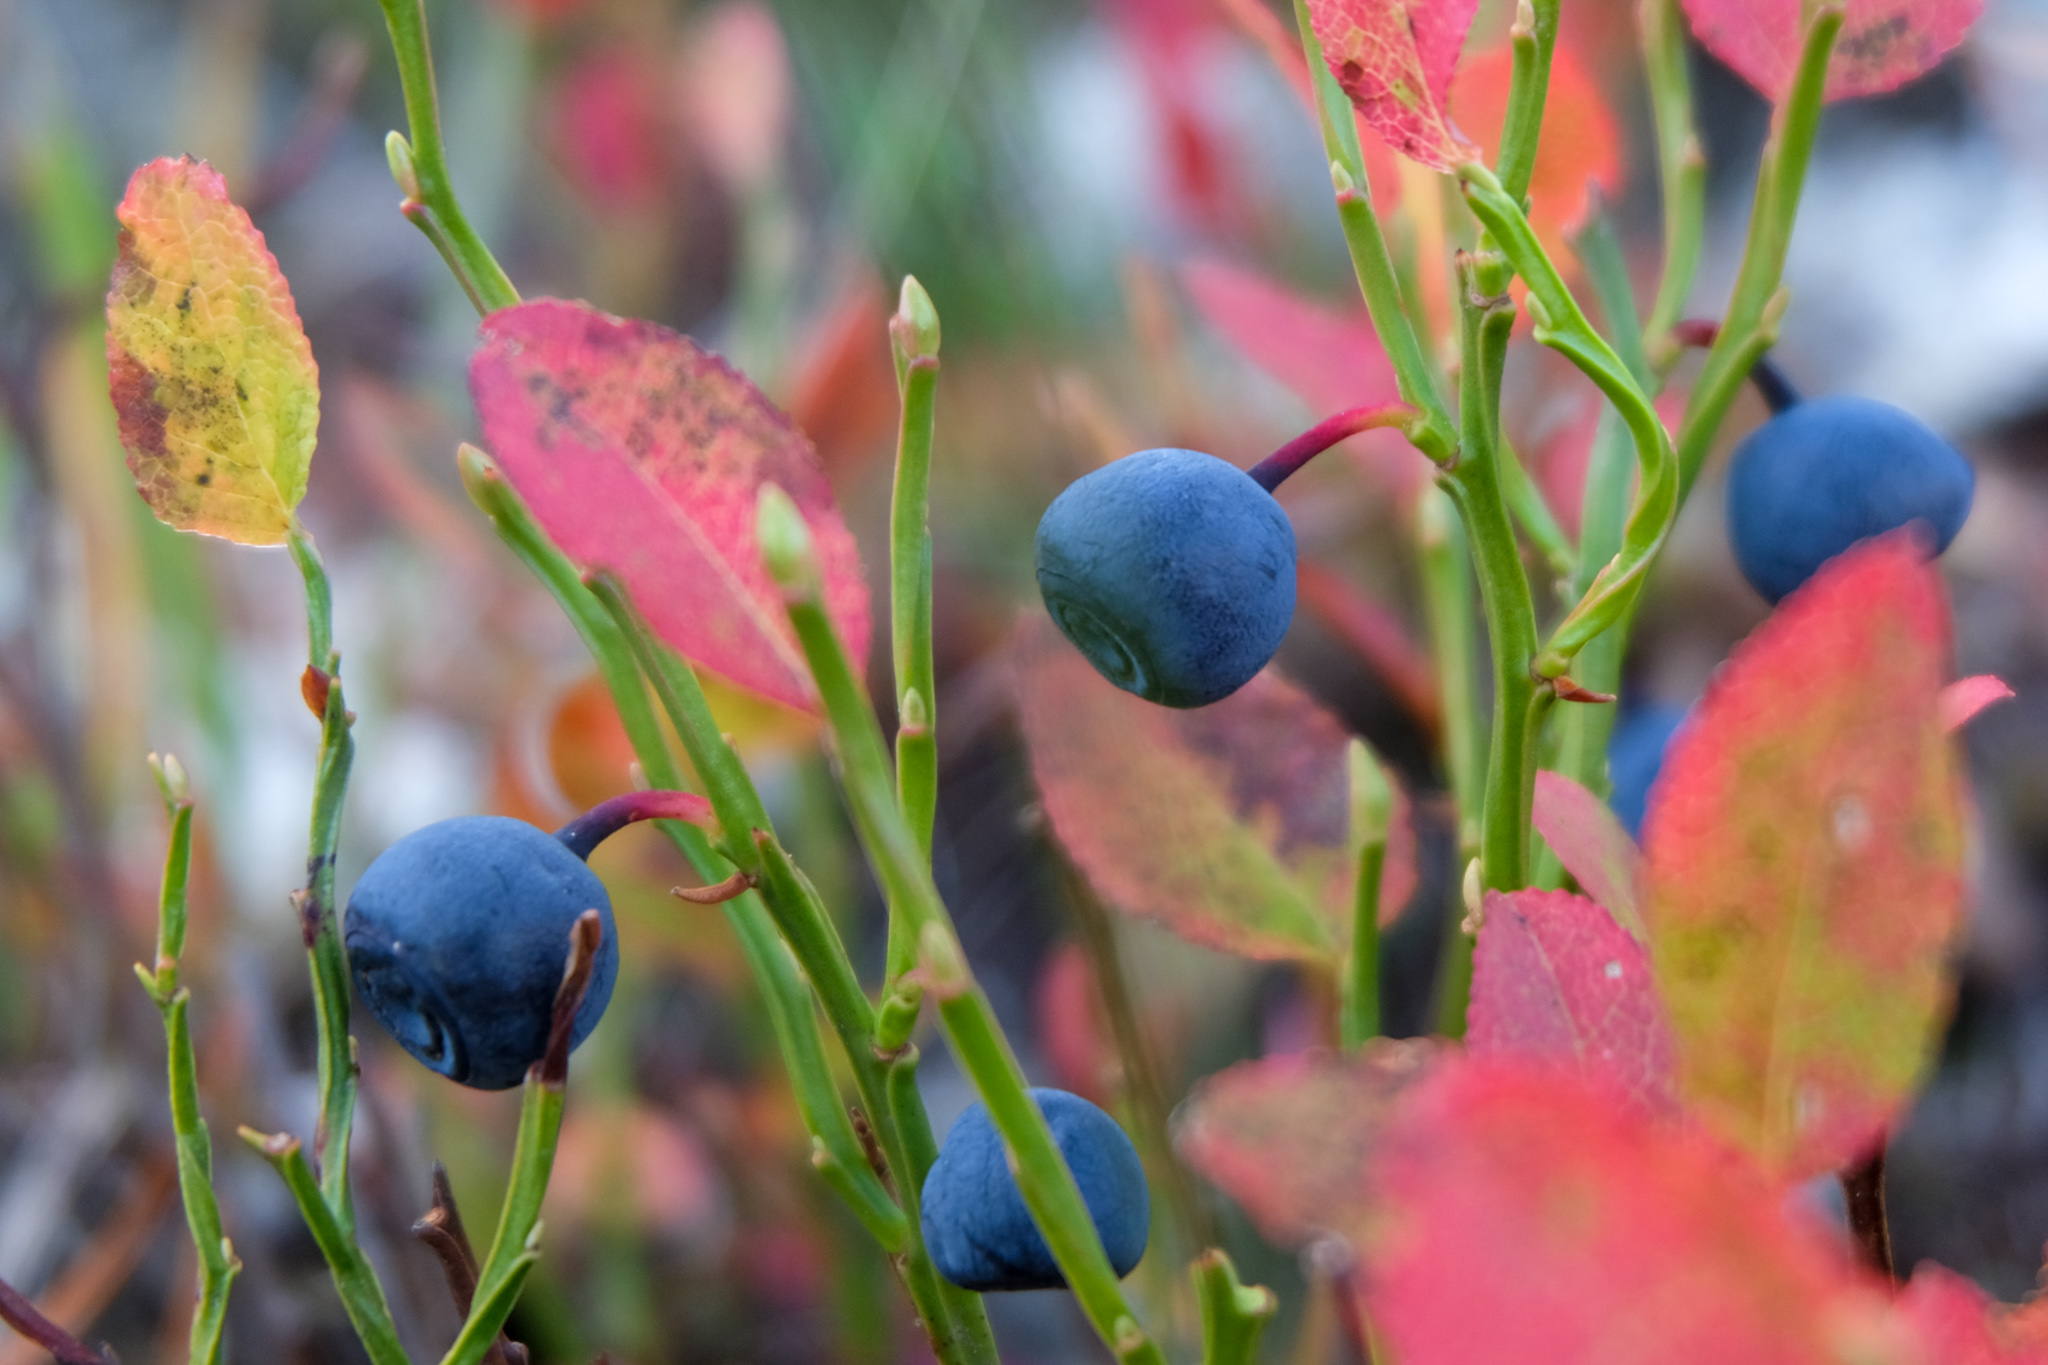 Blueberries...